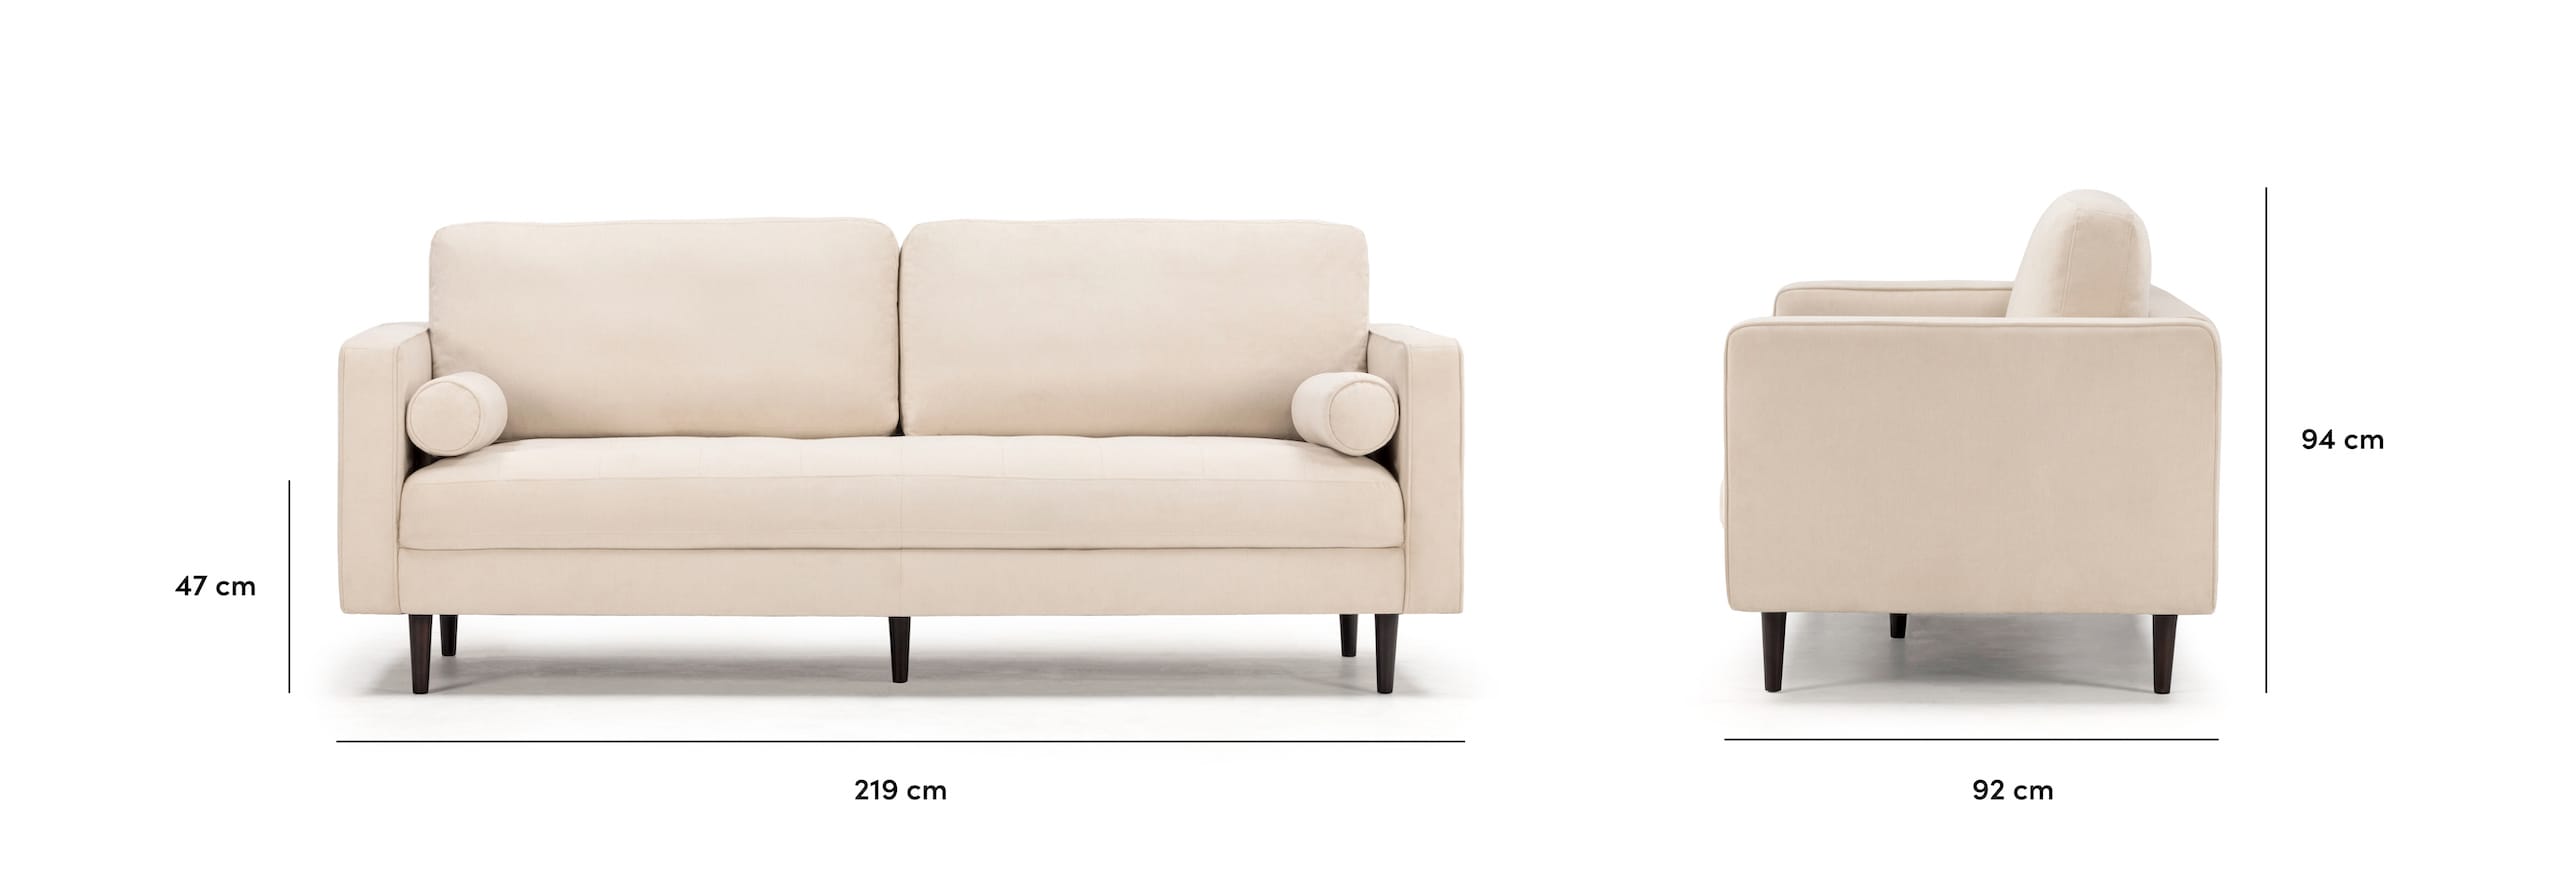 Soho sofa dimensions